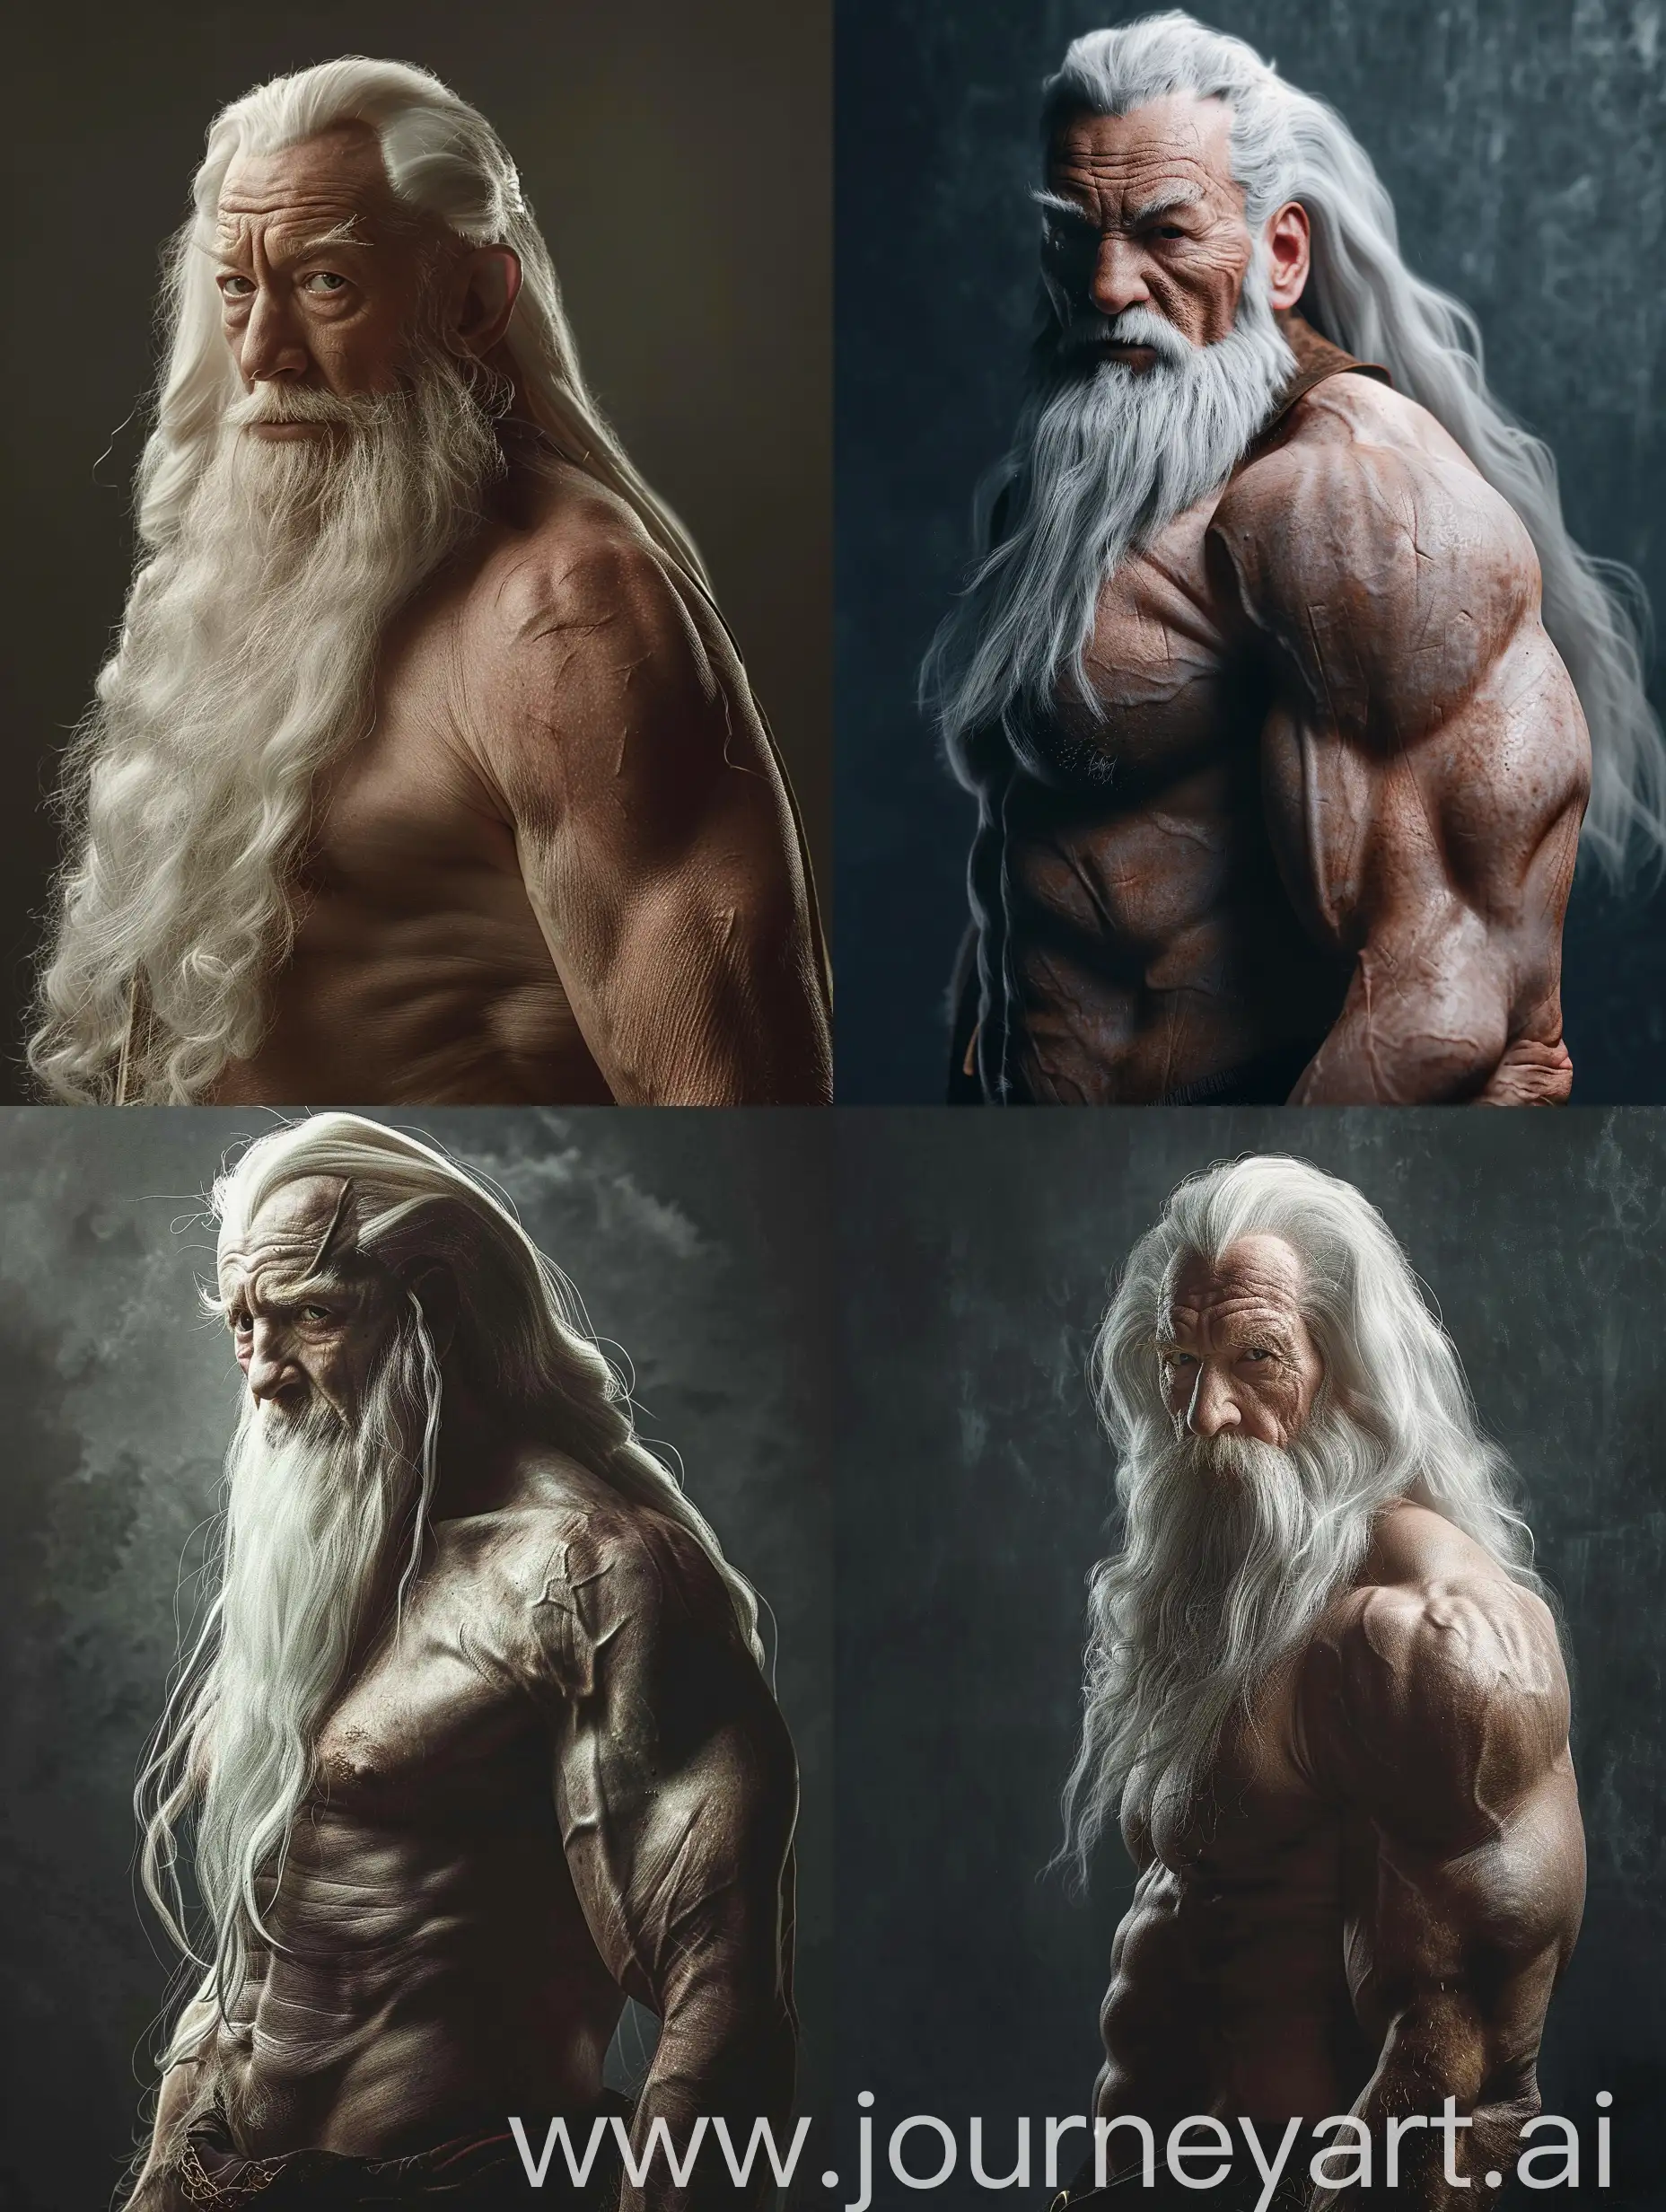 Dumbledore-Portrayal-Cinematically-Lit-Realistic-HalfBody-Image